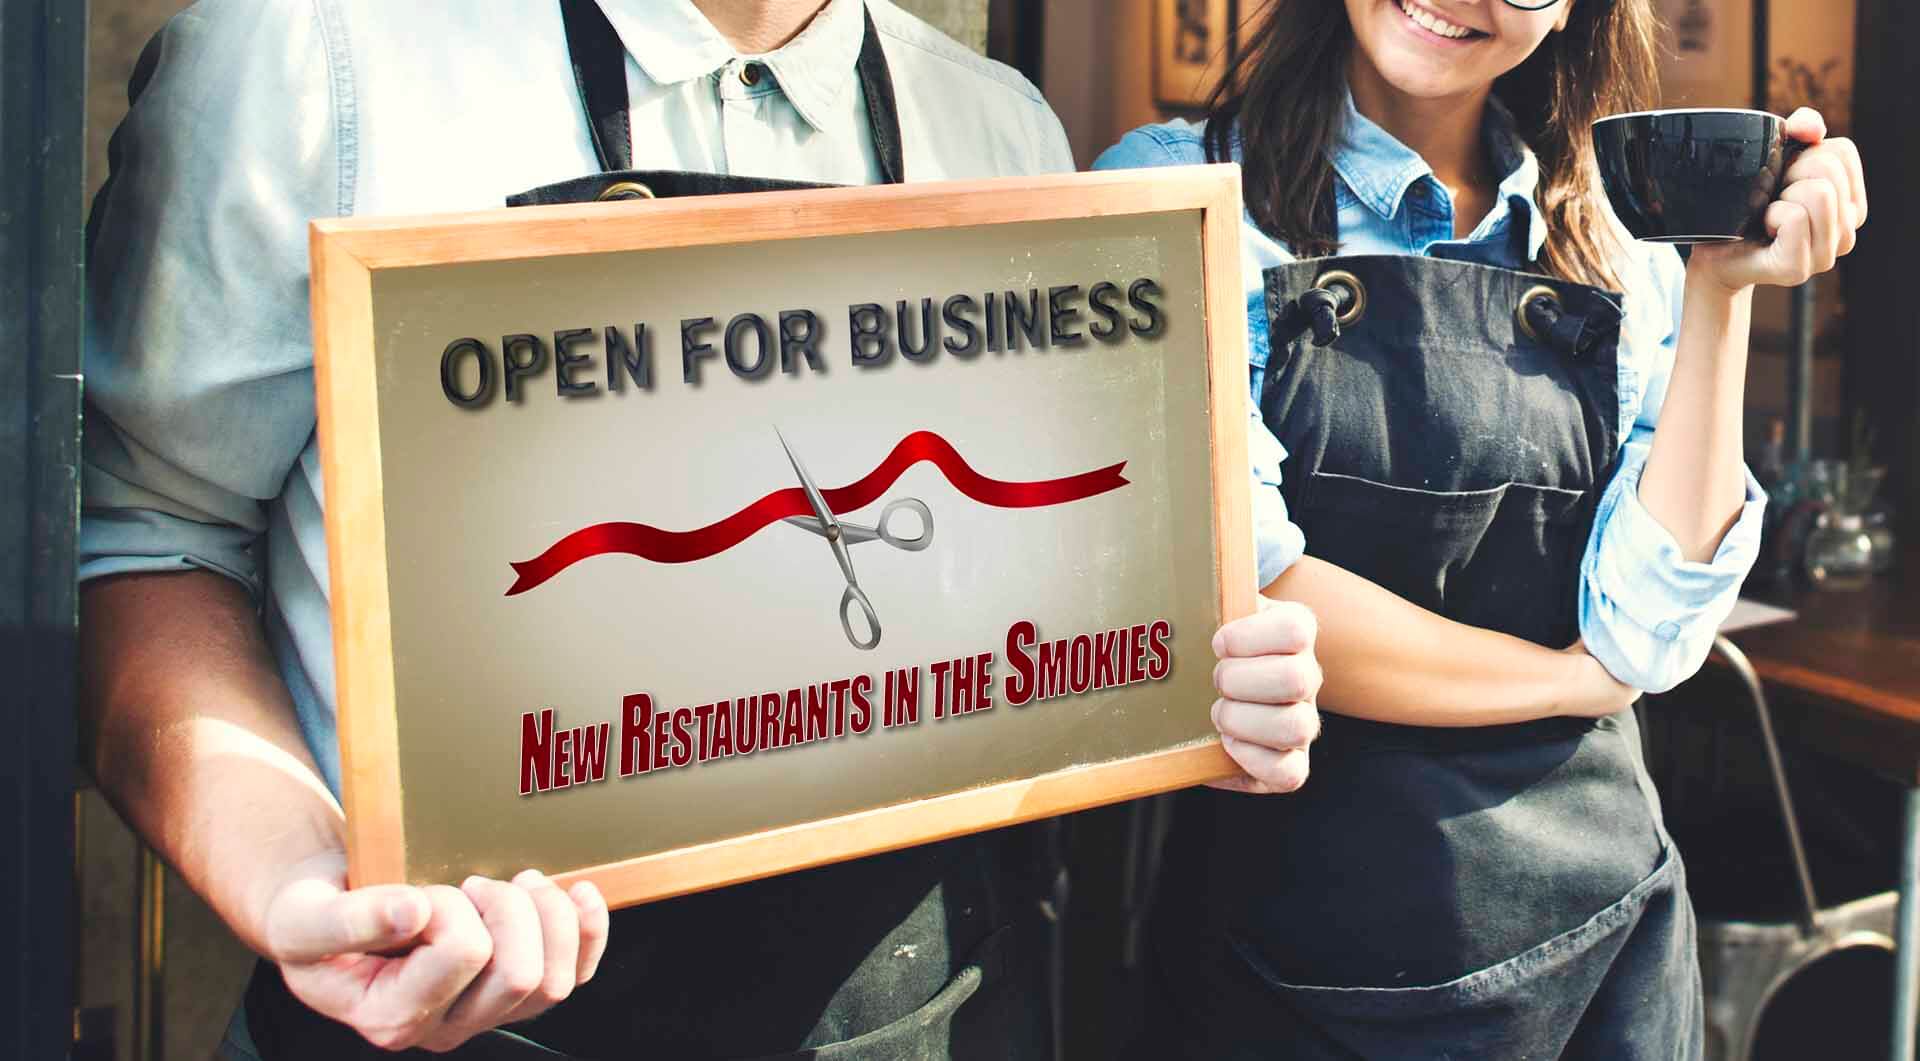 New-Restaurants-in-the-Smokies.-JPG.jpg